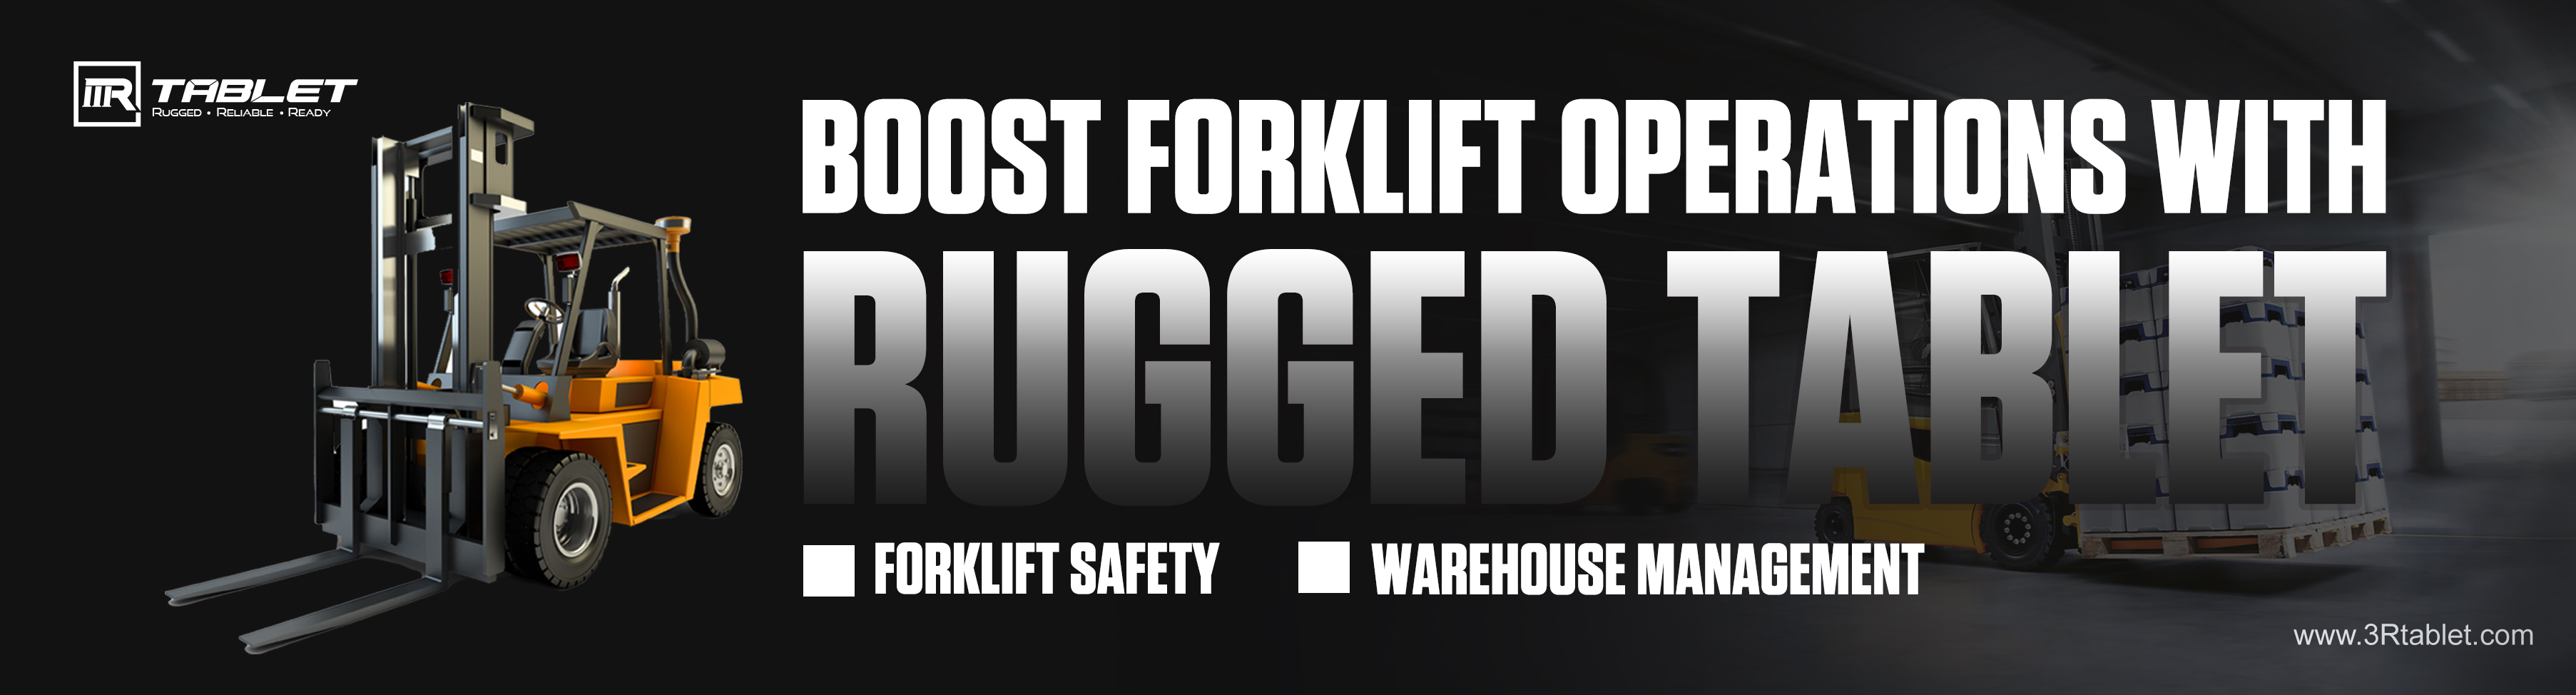 Txhim kho Forklift Safety thiab Warehouse Management nrog Rugged Tablets